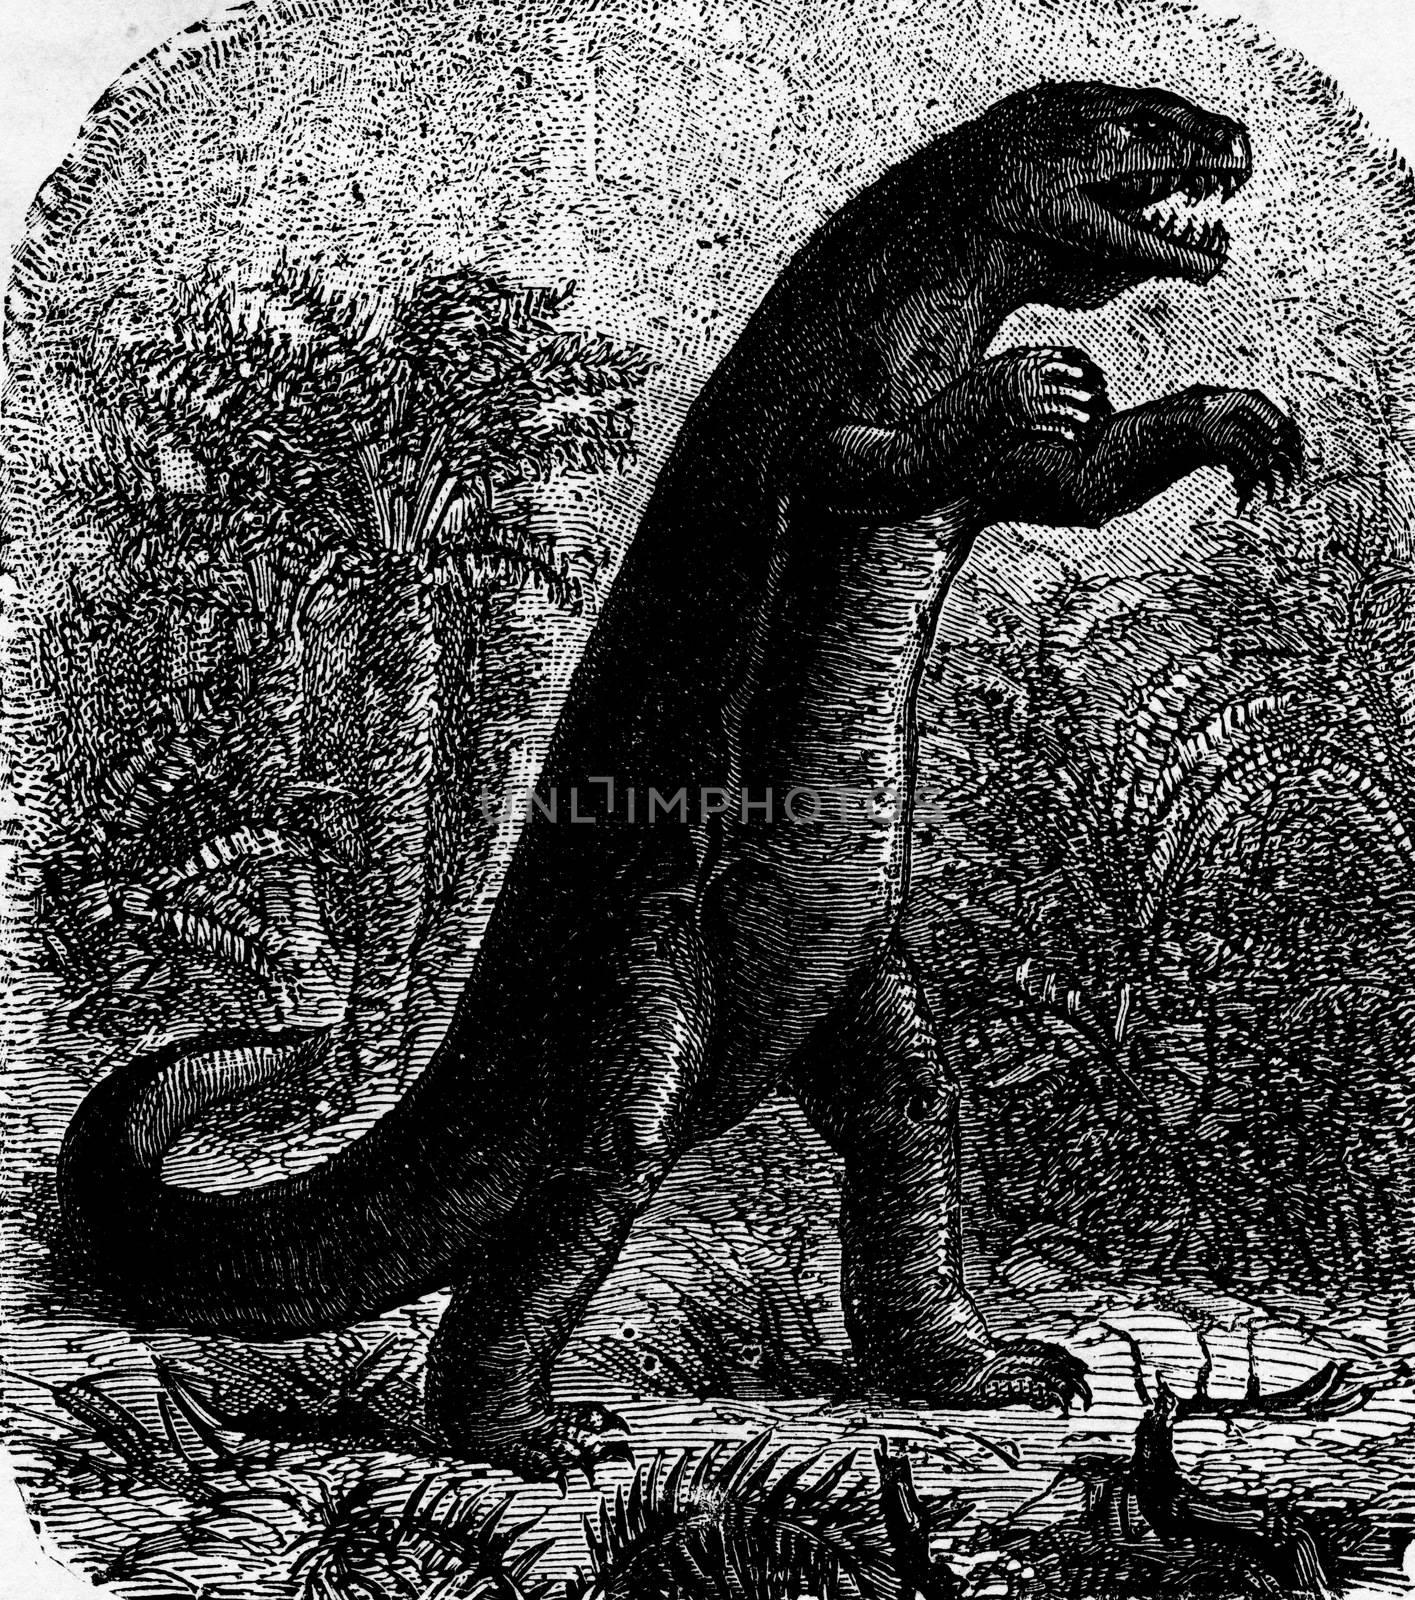 Dinosaur, vintage engraved illustration. Earth before man – 1886.
